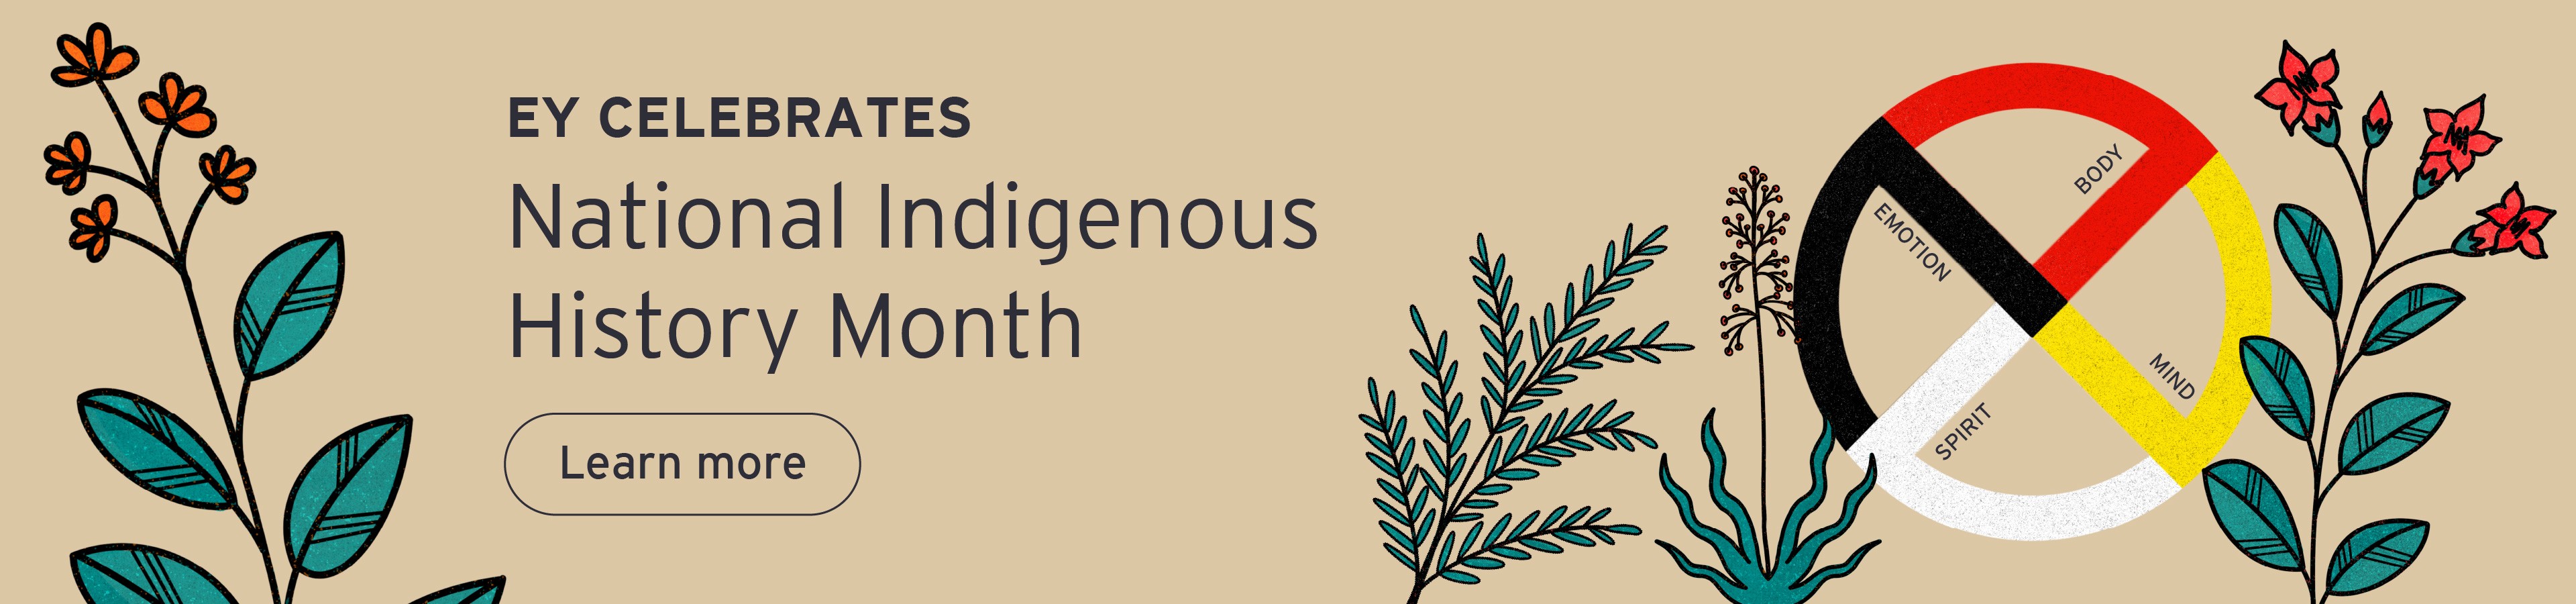 EY celebrates National Indigenous History Month